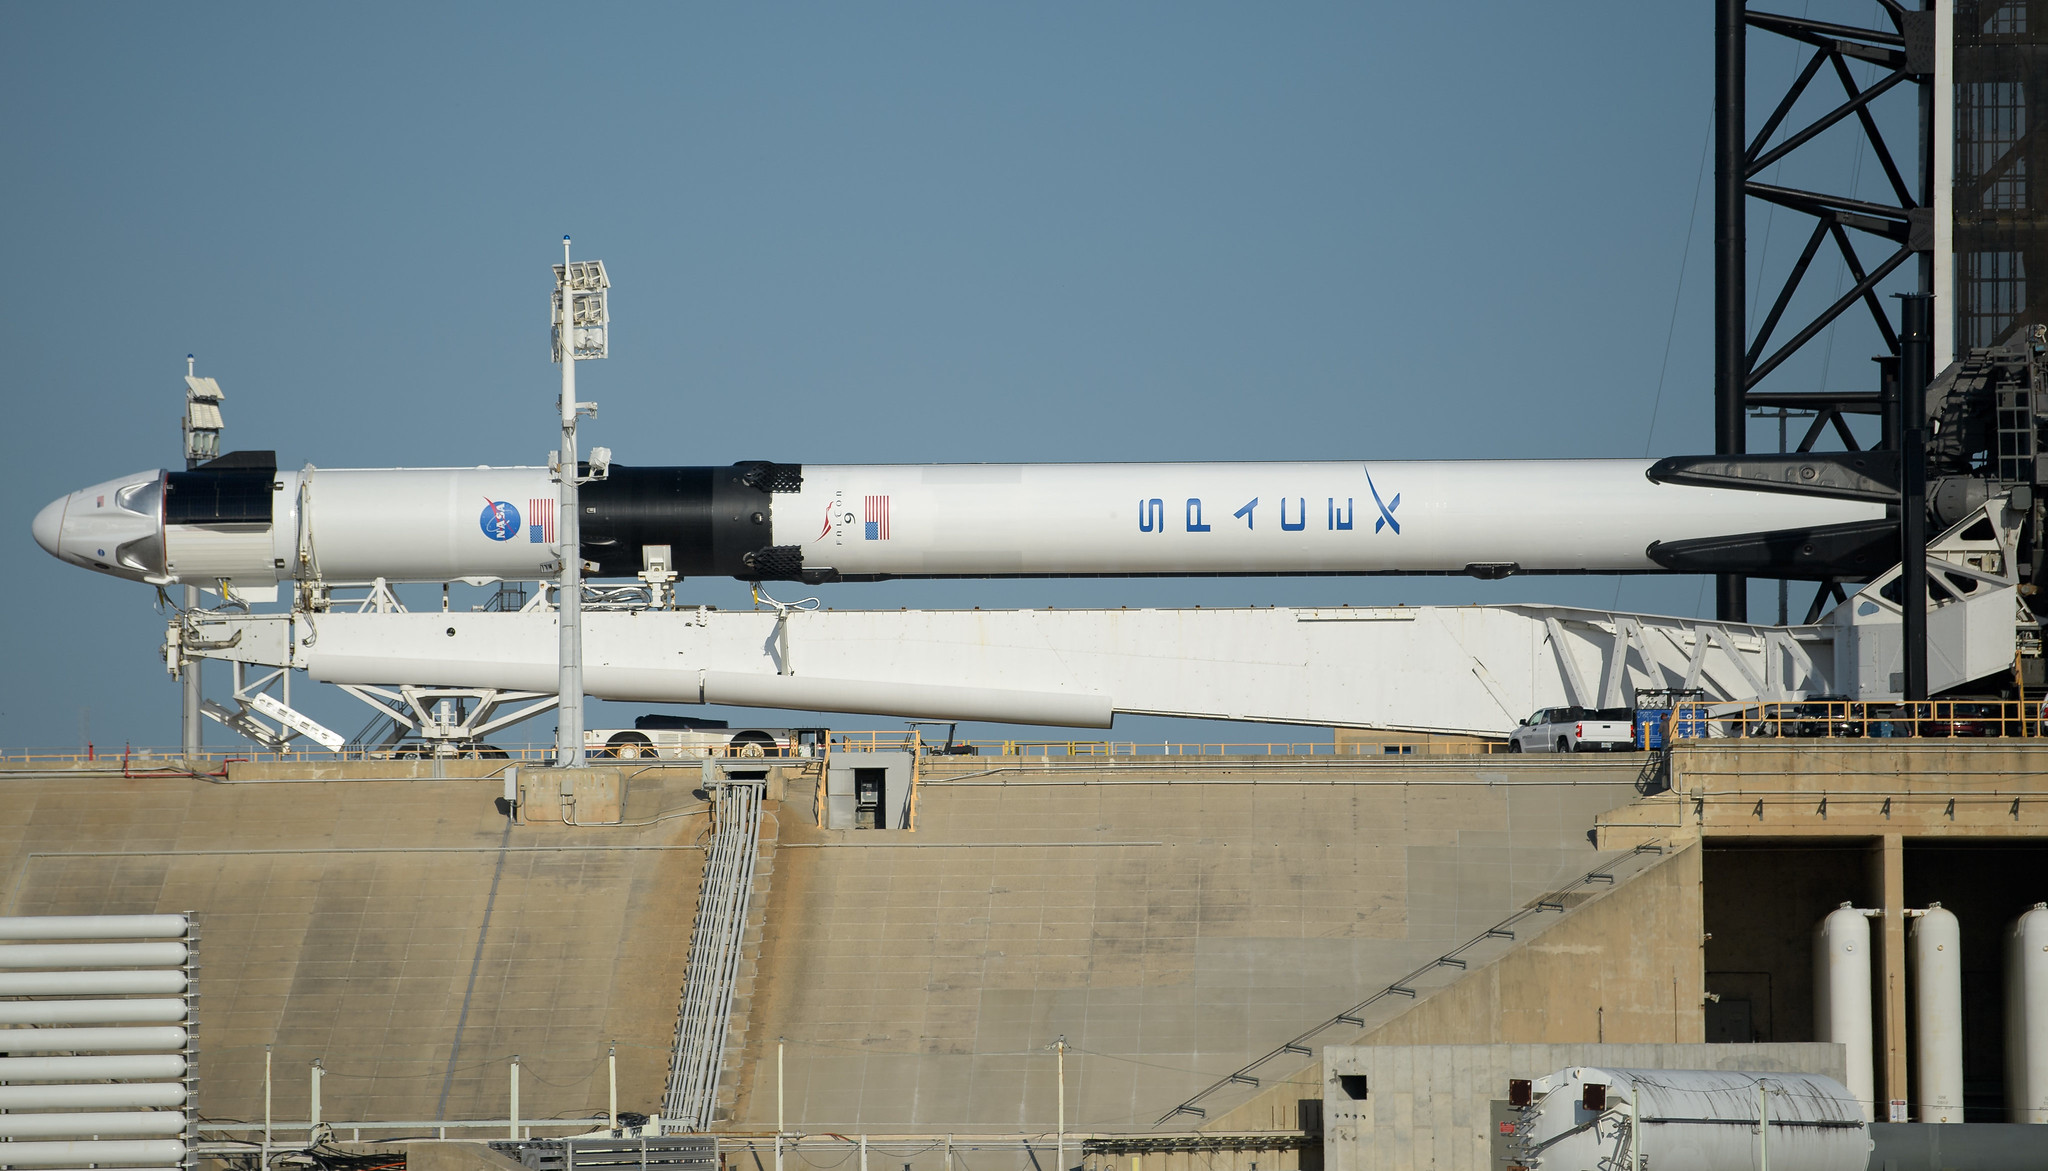 https://www.europafm.ro/wp-content/uploads/2020/05/Pregatire-lansare-SpaceX-Demo-2-27-mai-2020-FOTO-NASA-1.jpg